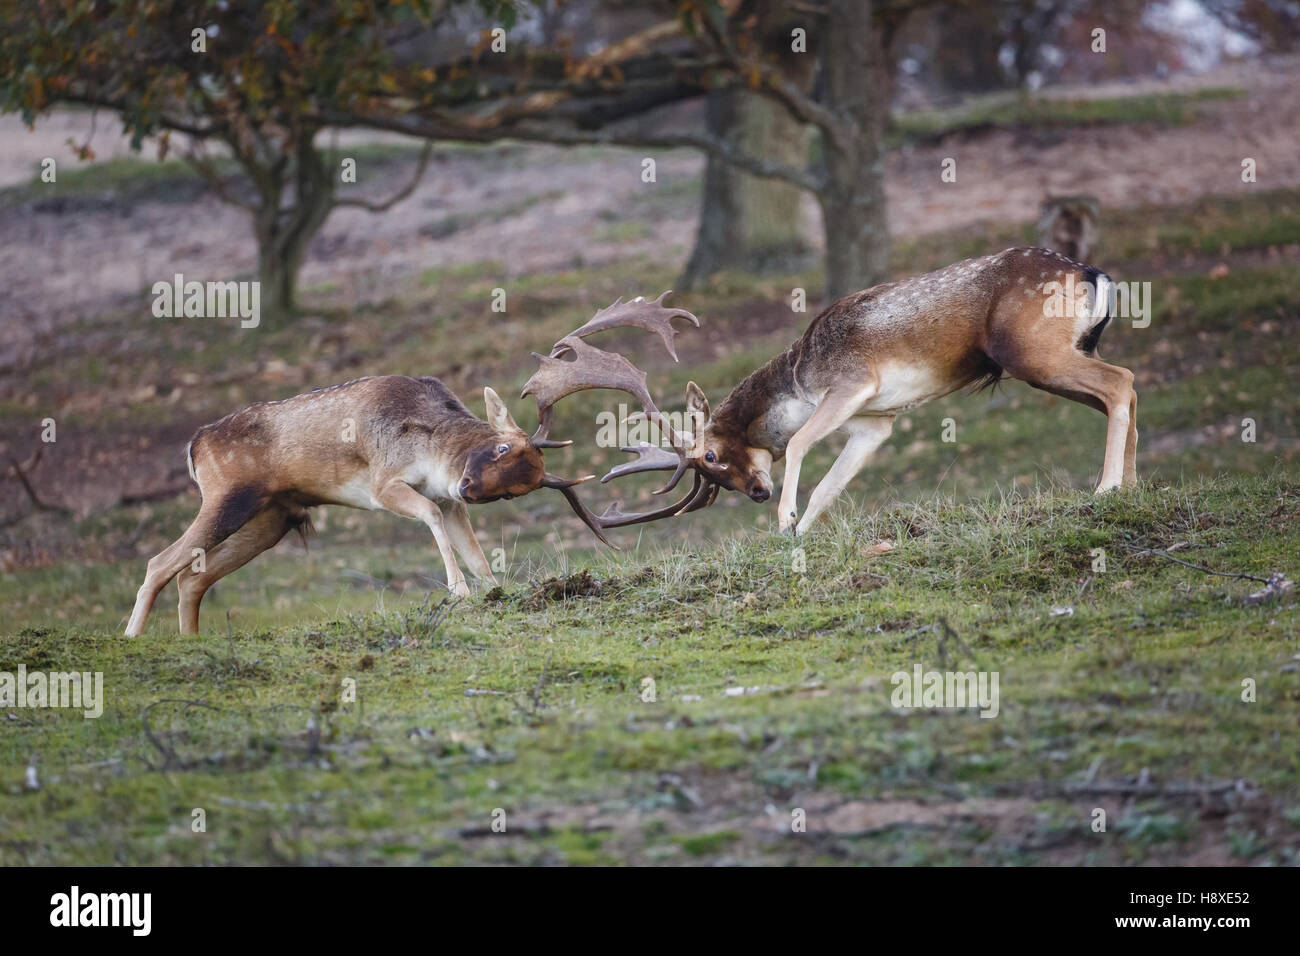 two fallow deer bucks fighting during the rutting season Stock Photo